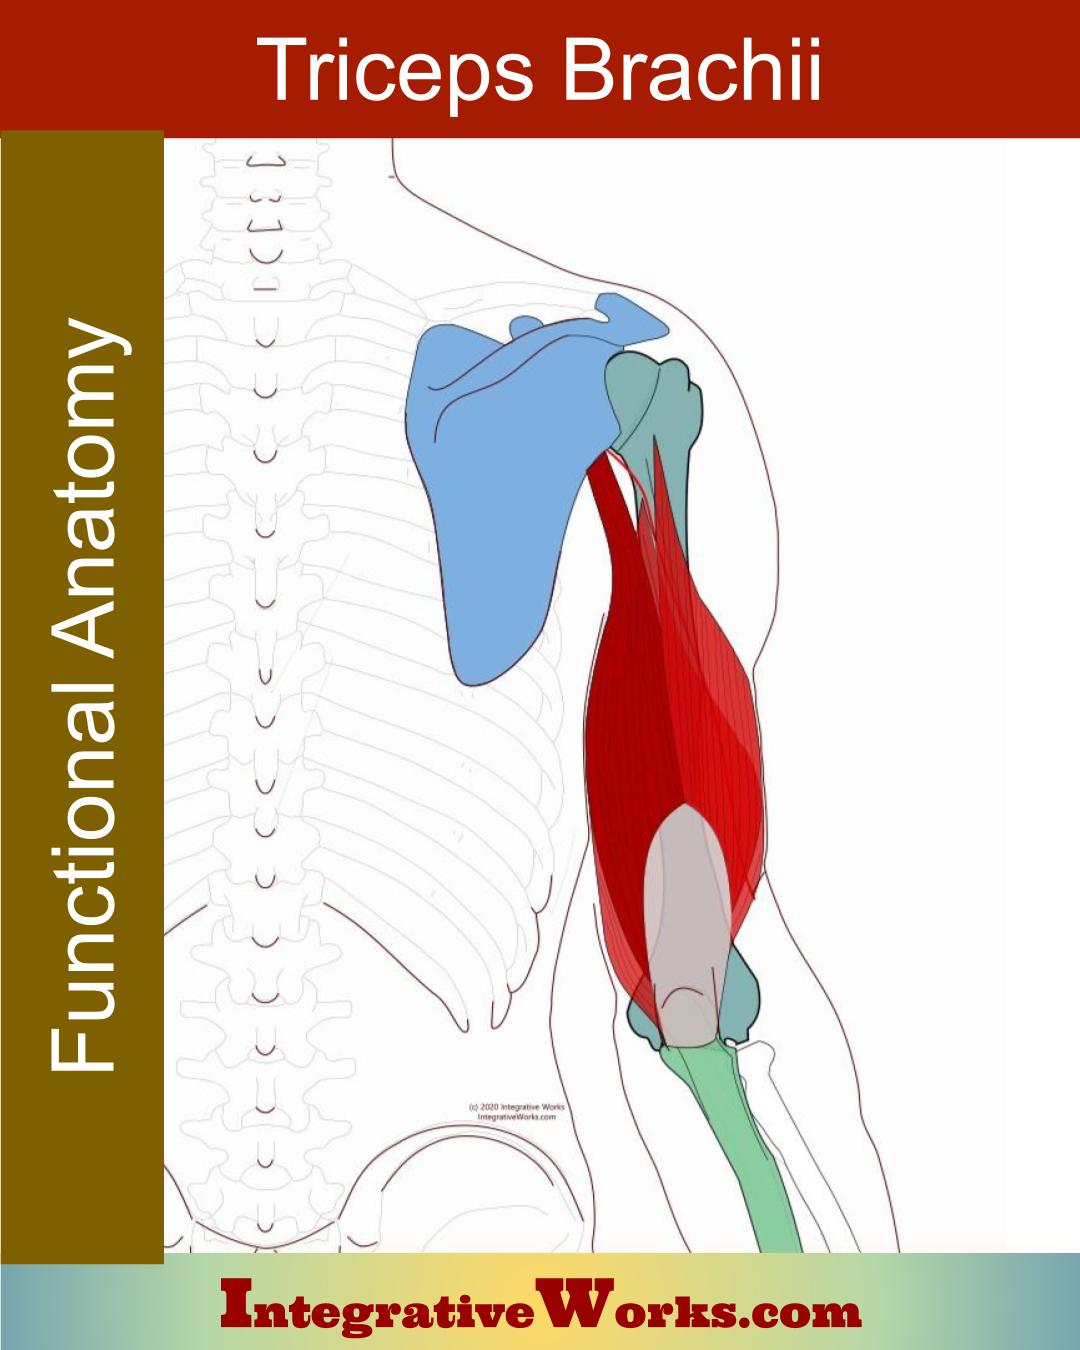 Triceps Brachii – Functional Anatomy